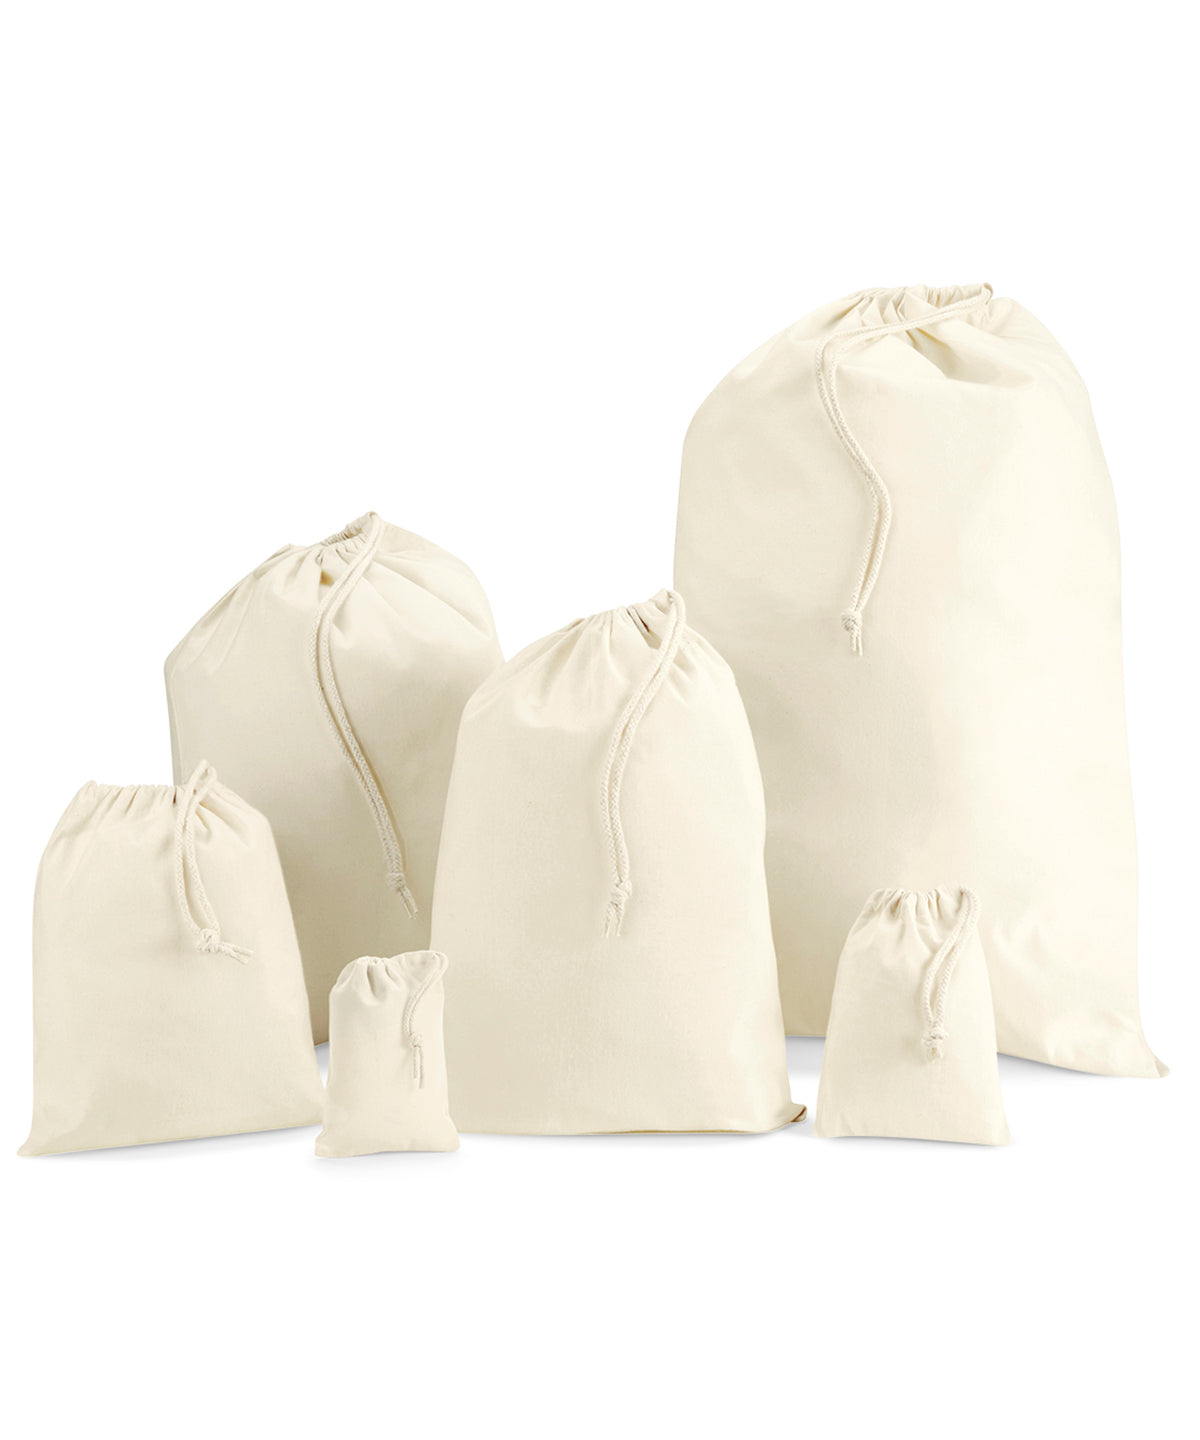 Töskur - Recycled Cotton Stuff Bag